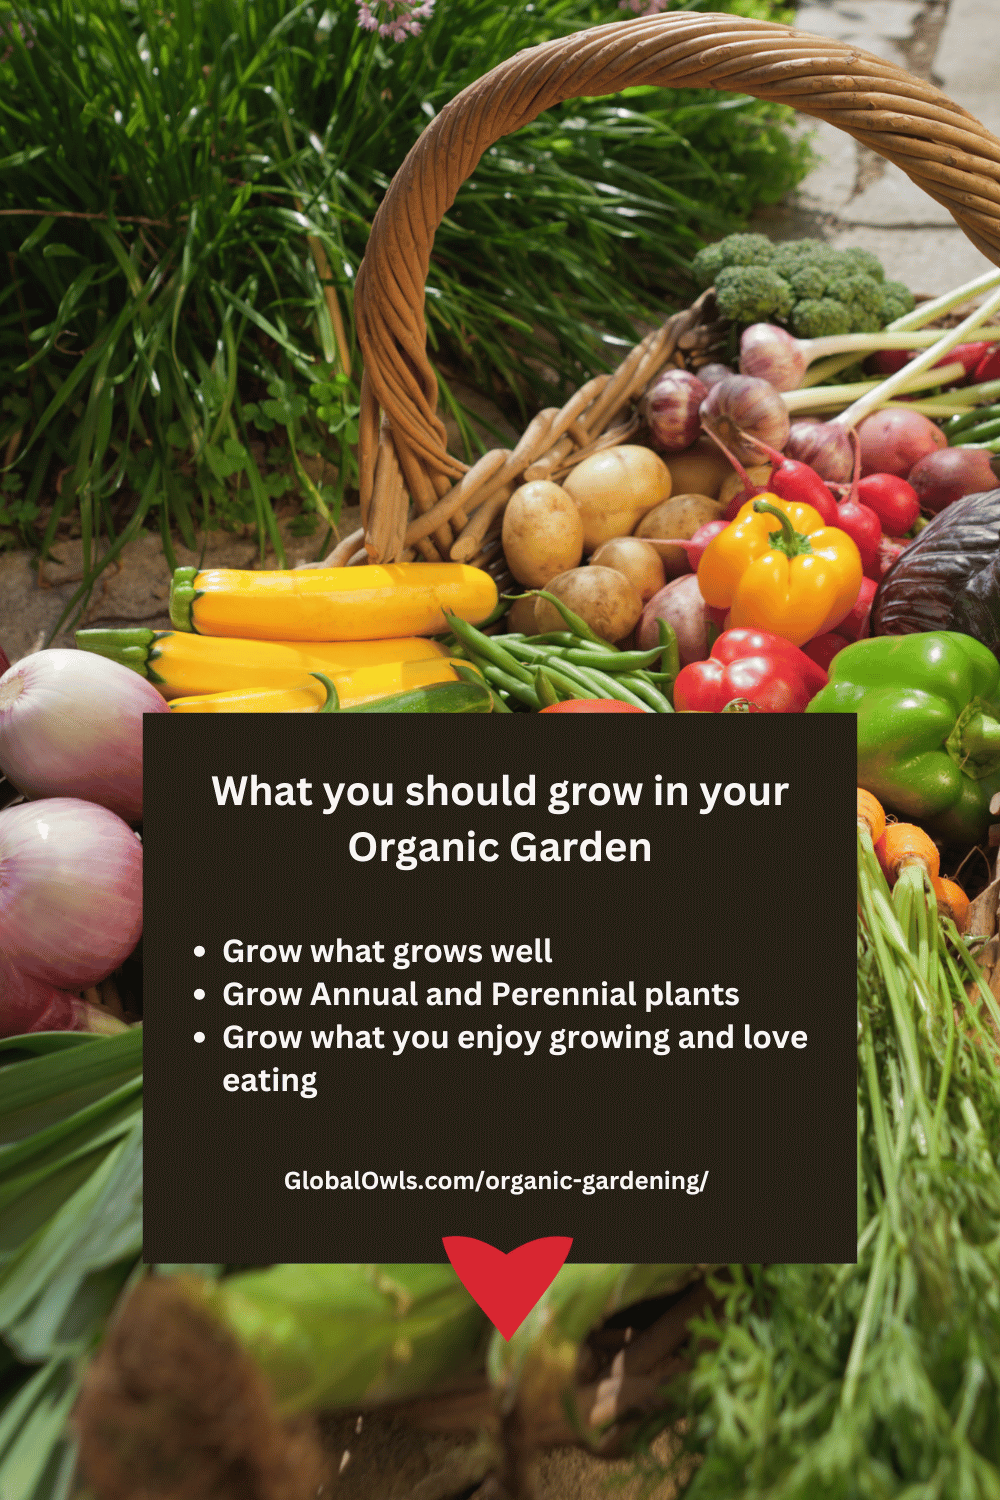 What you should grow in your Organic Garden